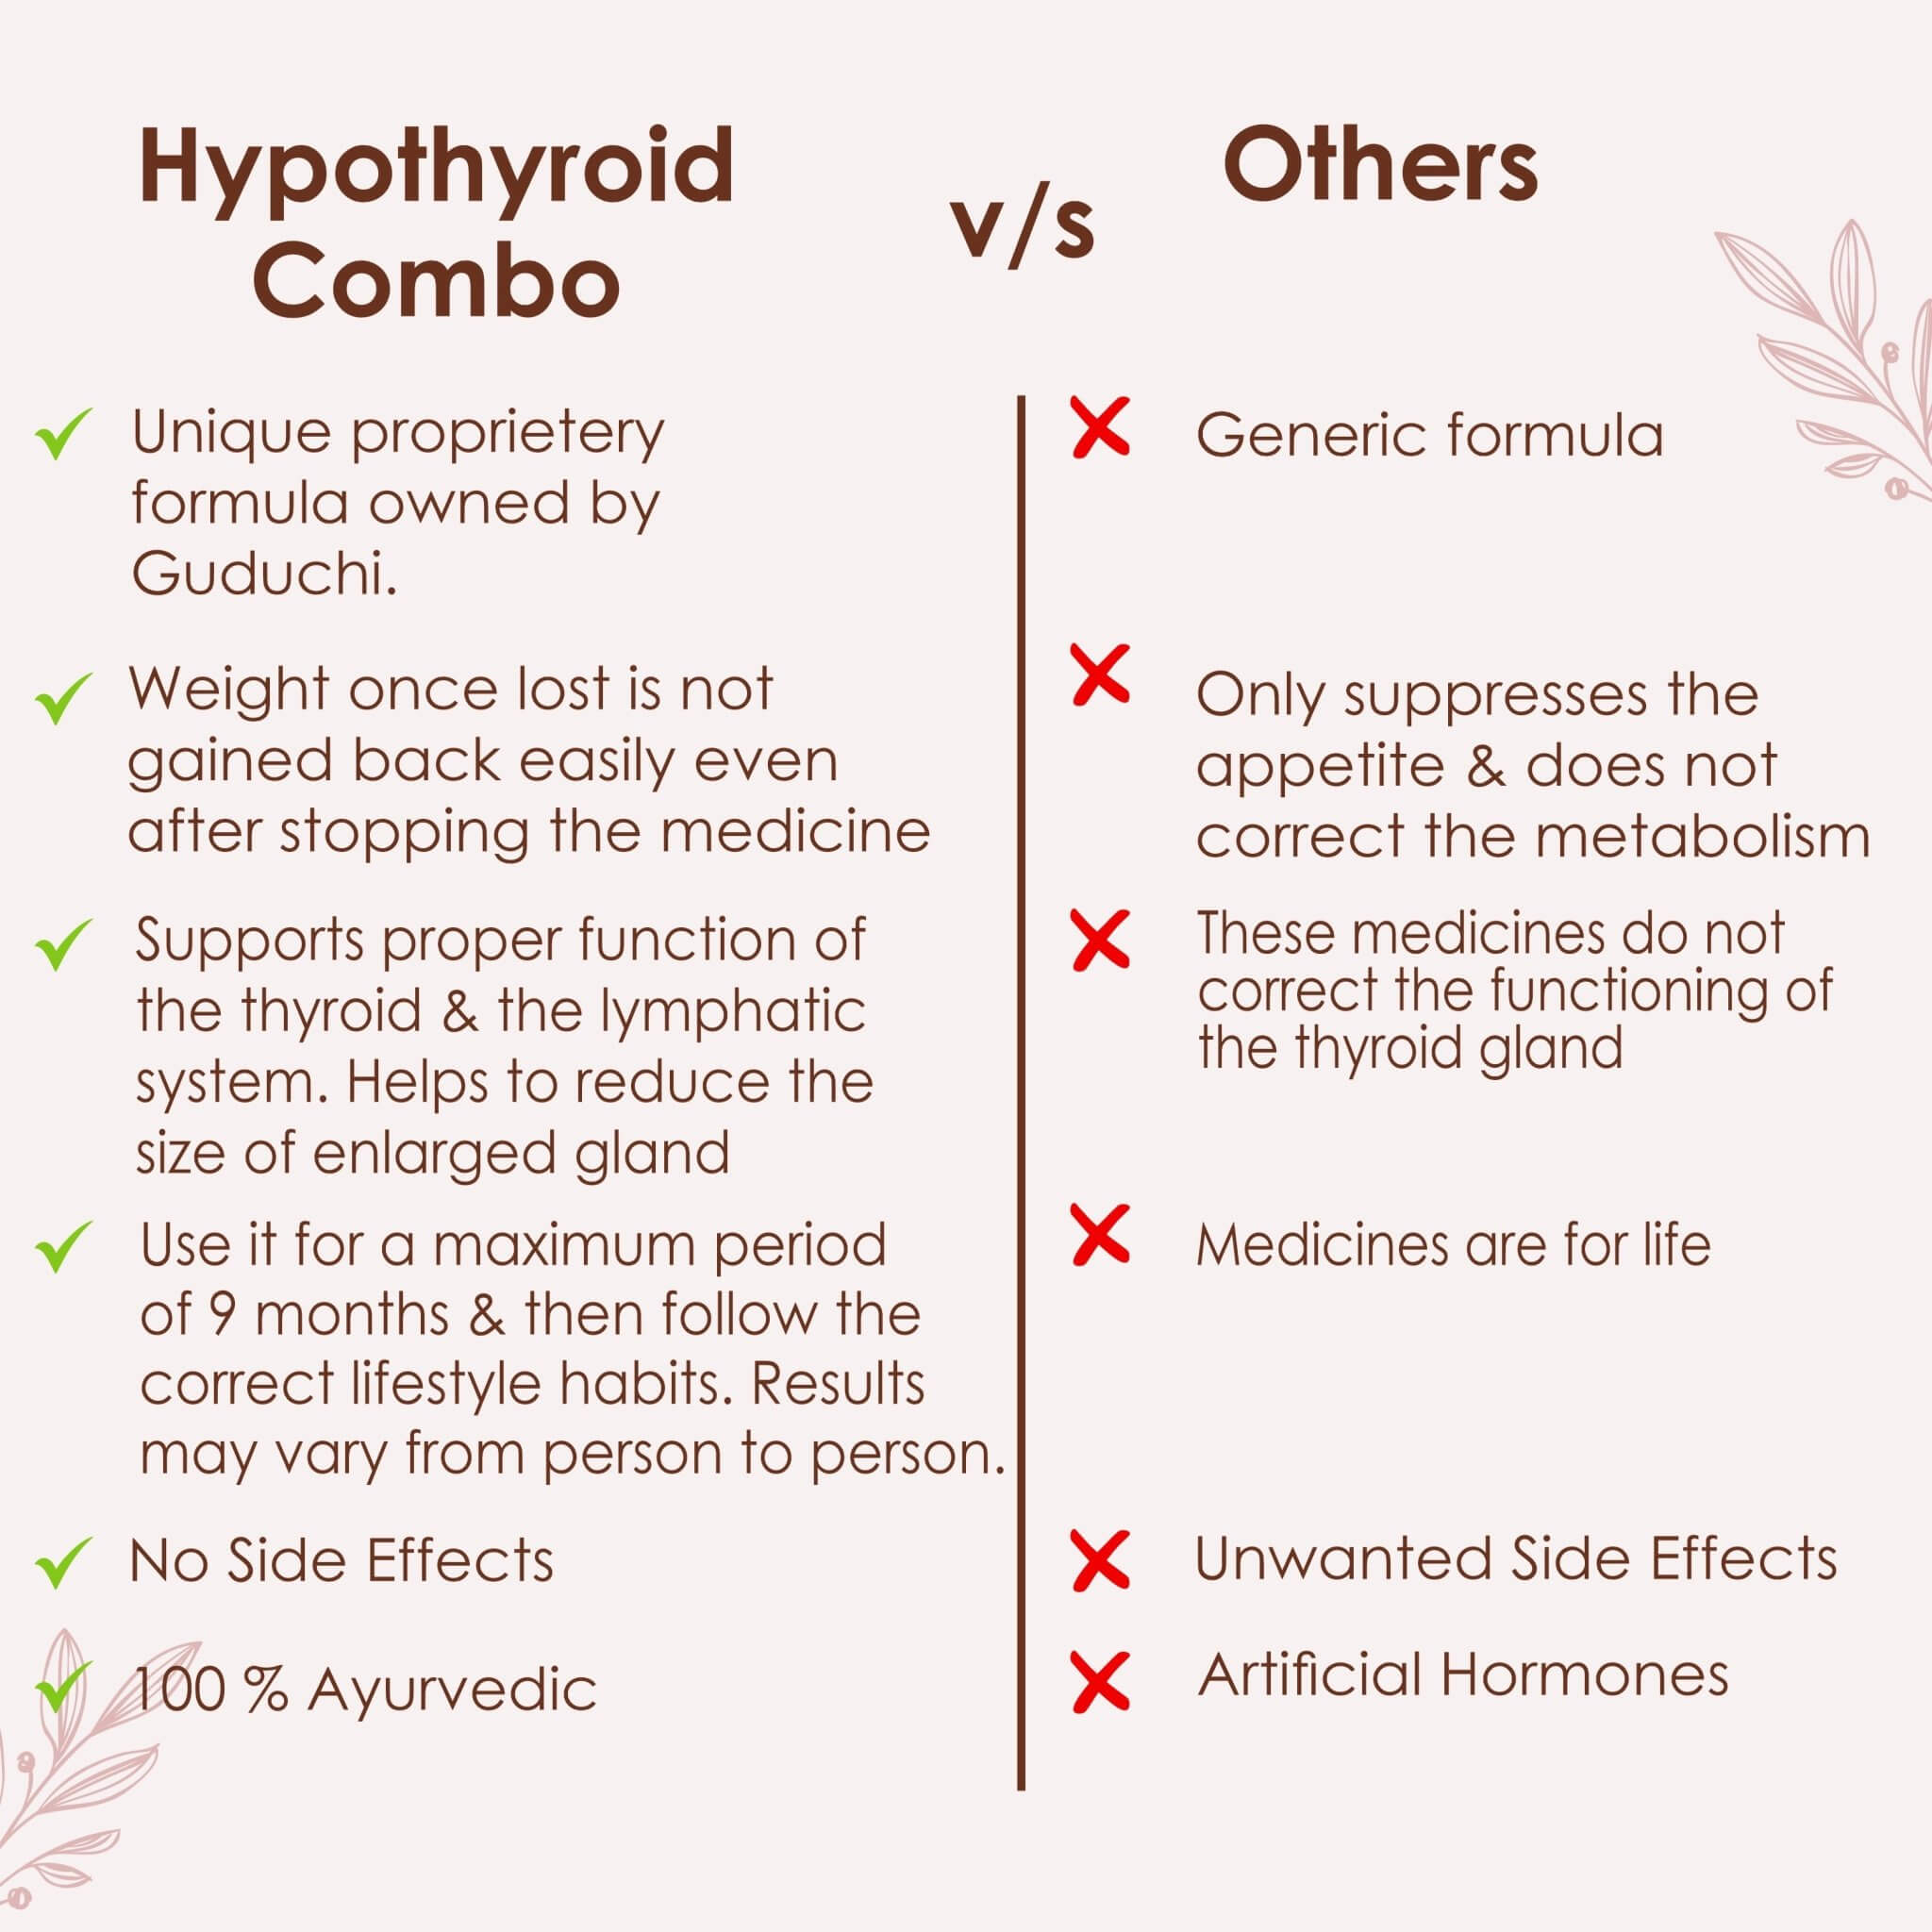 Weight Loss Regimen for Hypothyroid. Obesidat & NAV-C Tablets with G2O Water Mix. - Guduchi Ayurveda